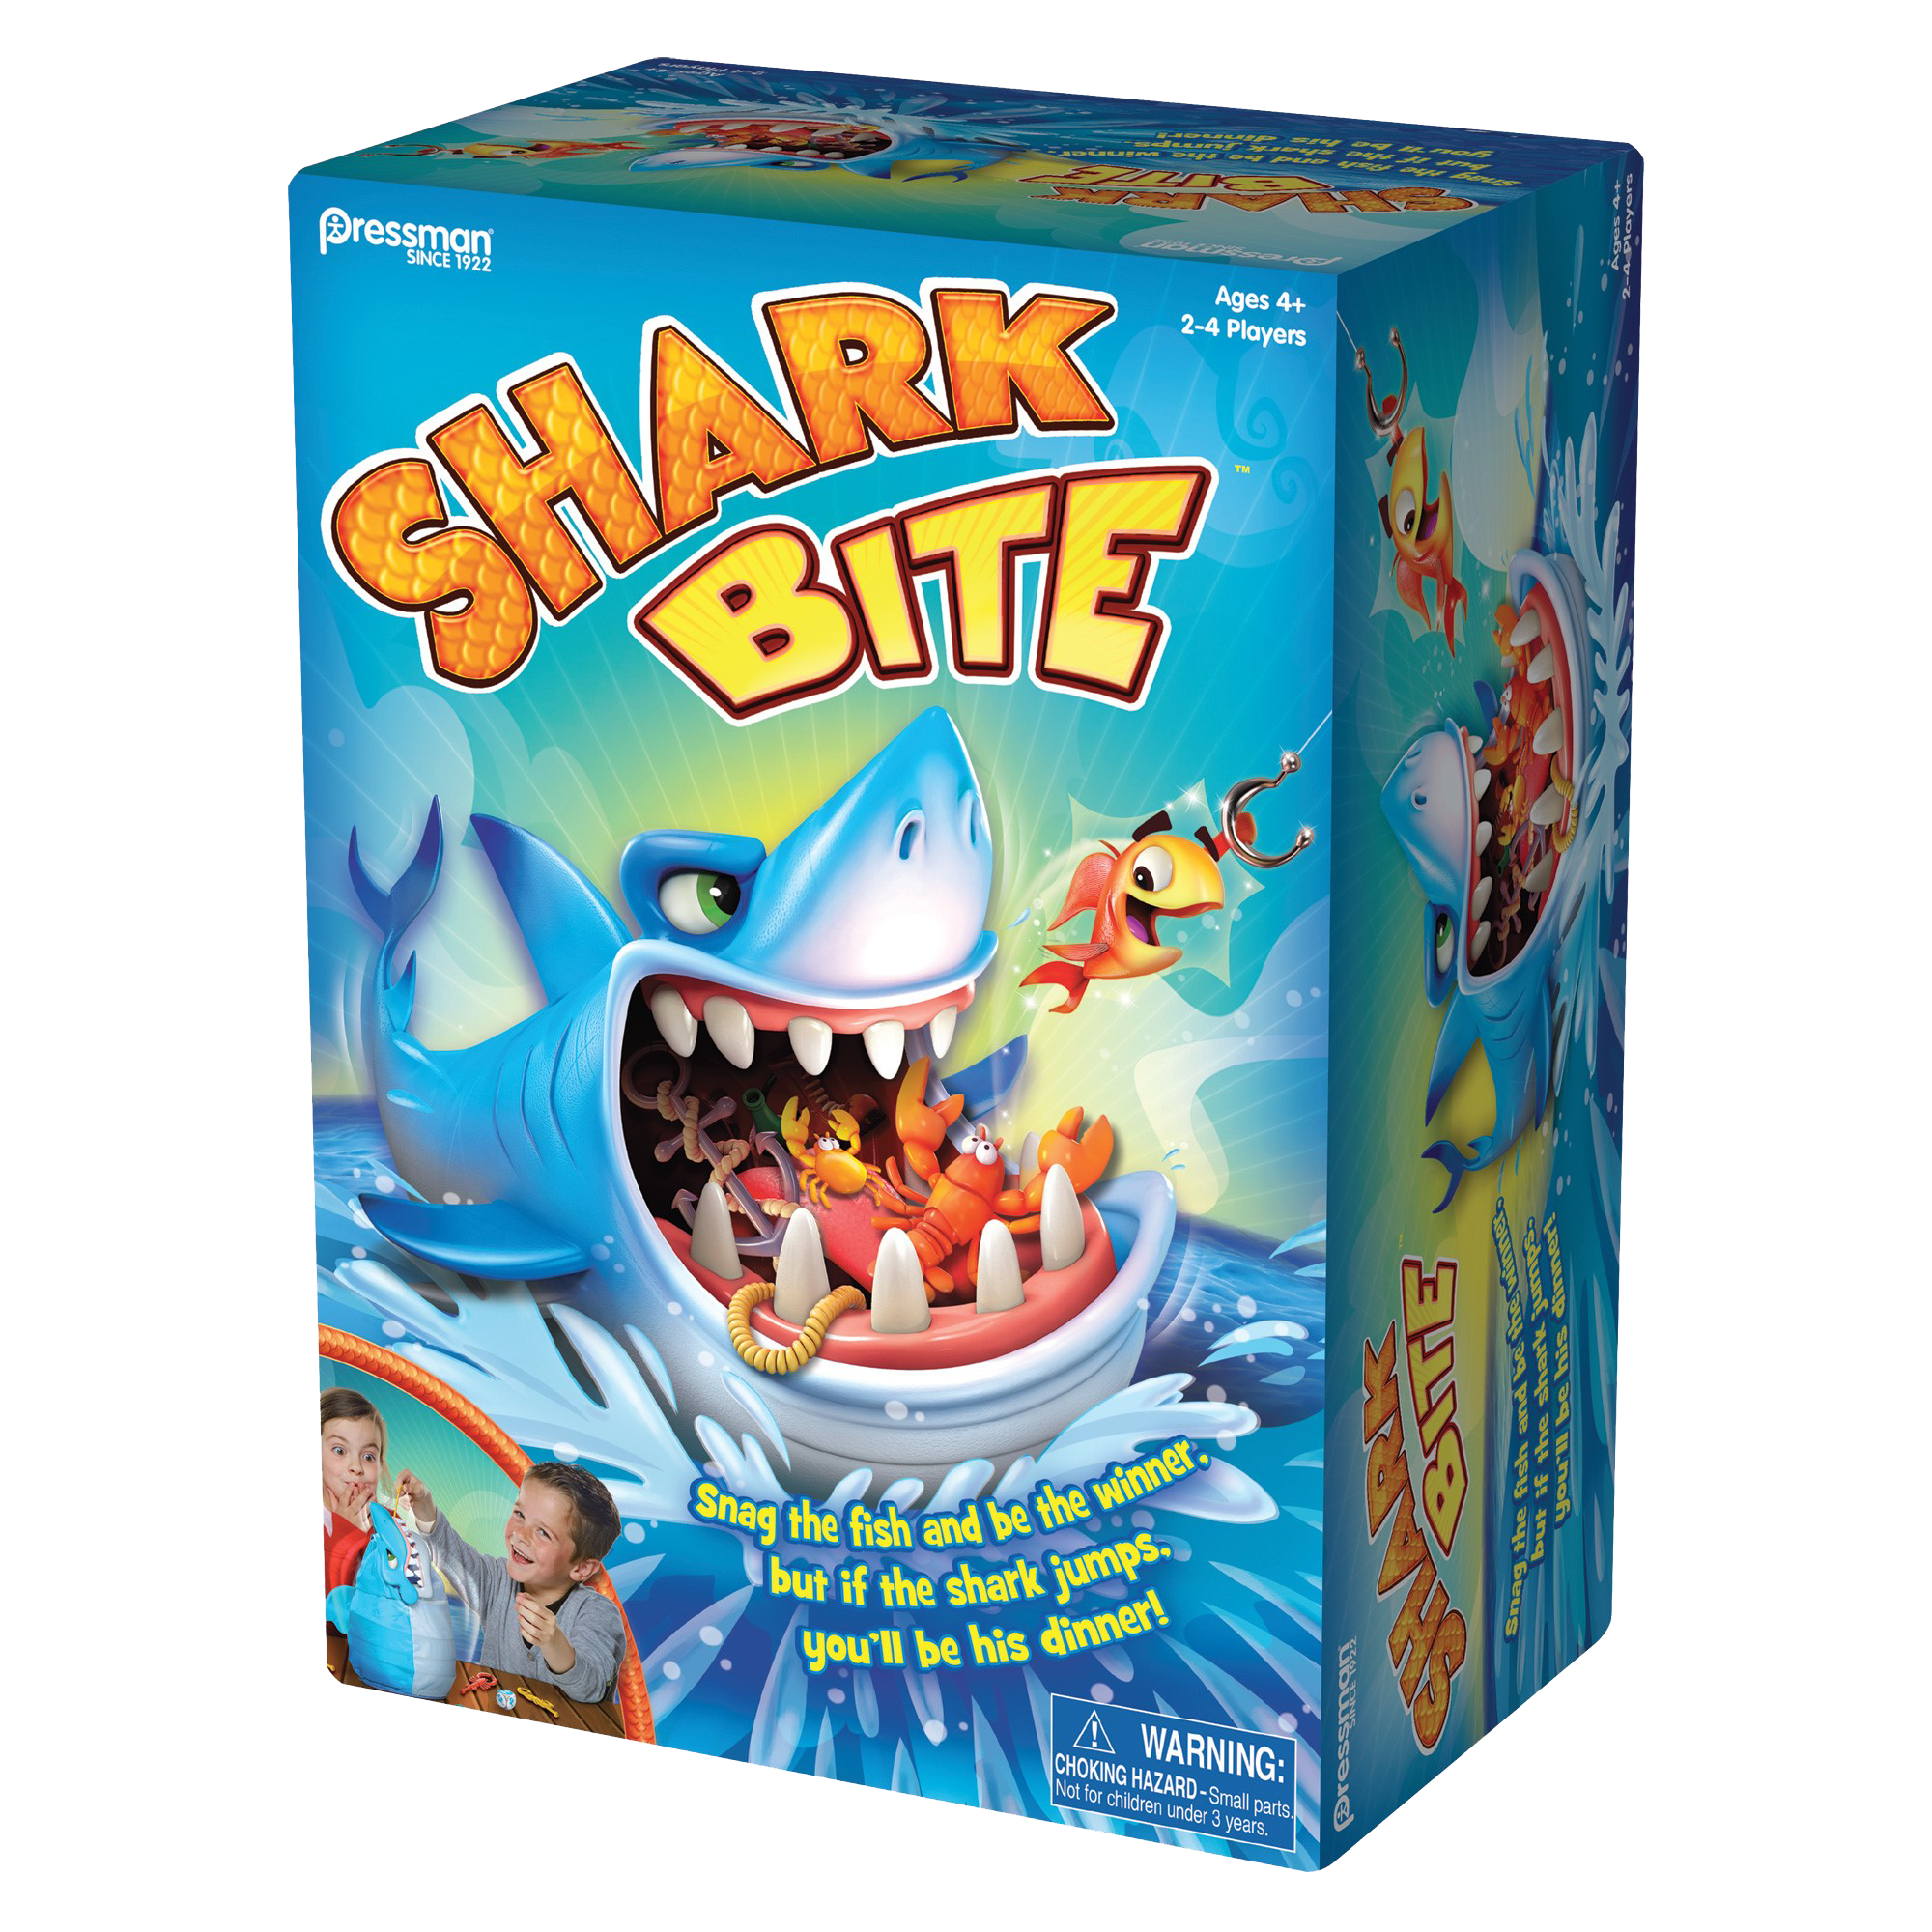 Roblox Shark Bite Codes 2018 July 28th